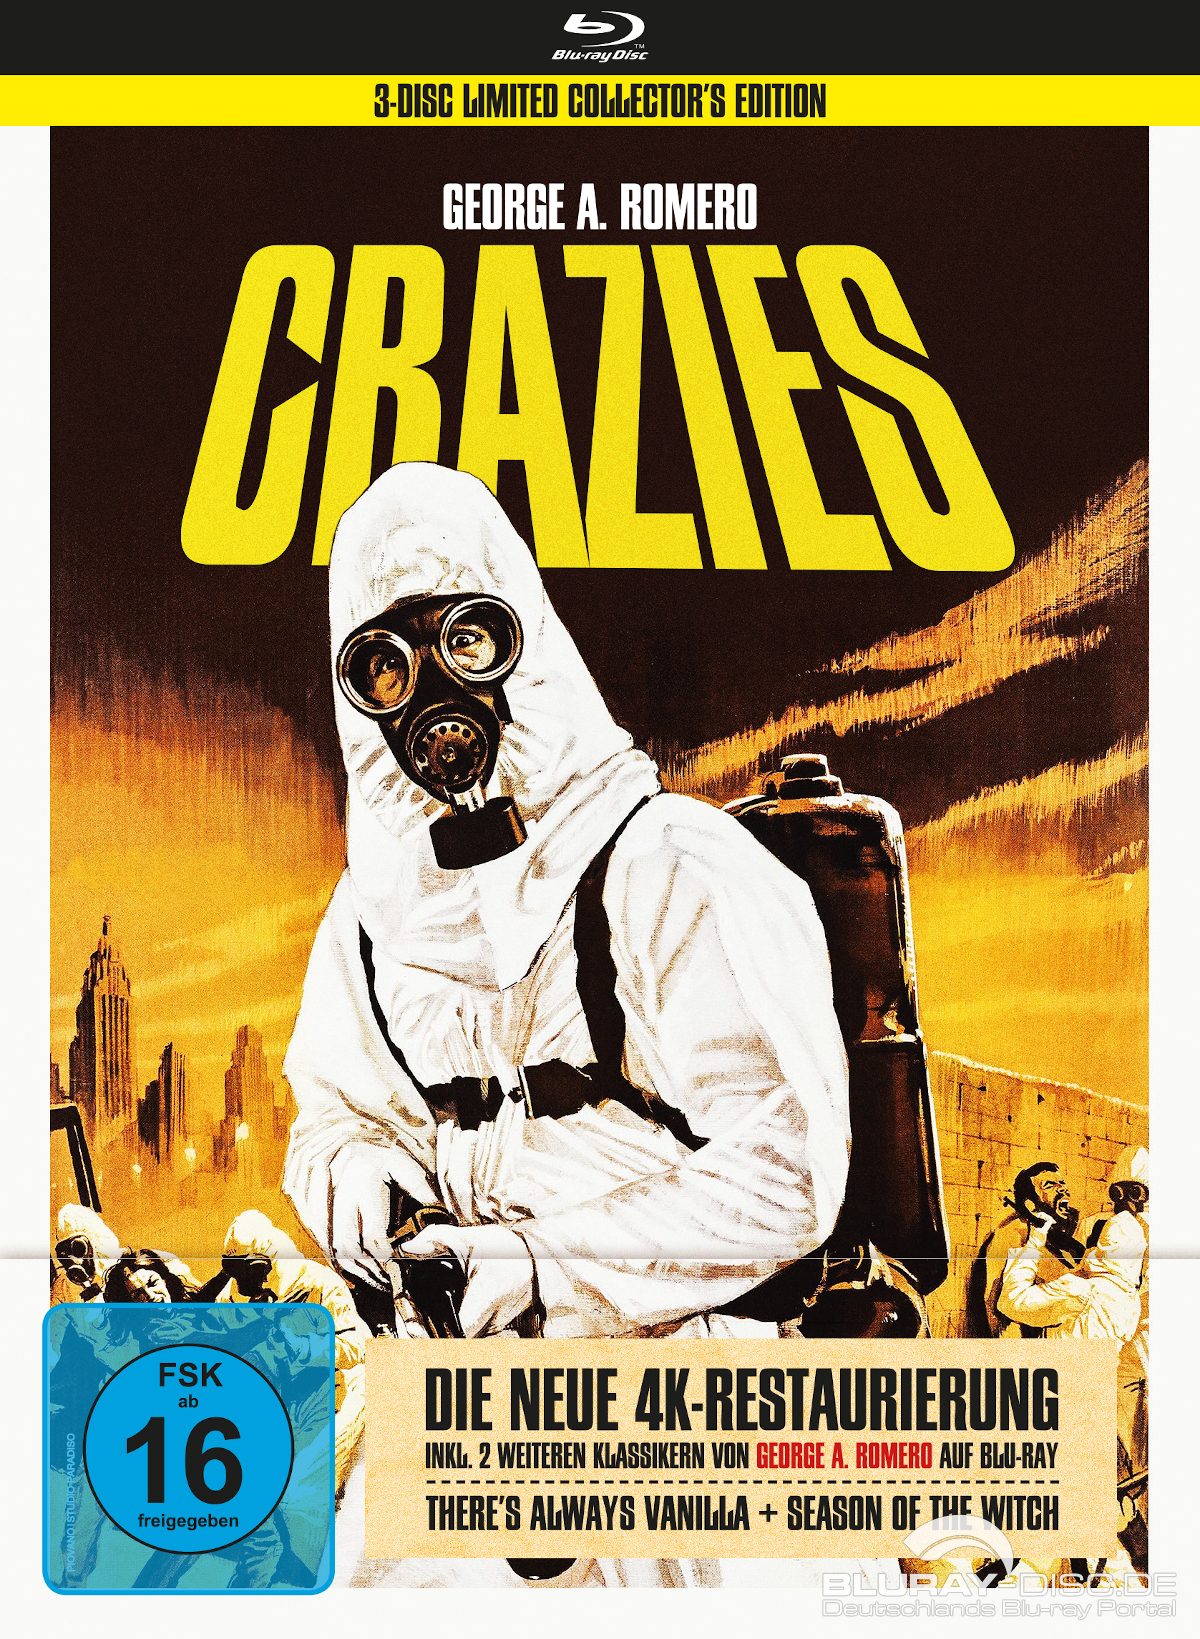 Crazies-Mediabook-Galerie-01.jpg